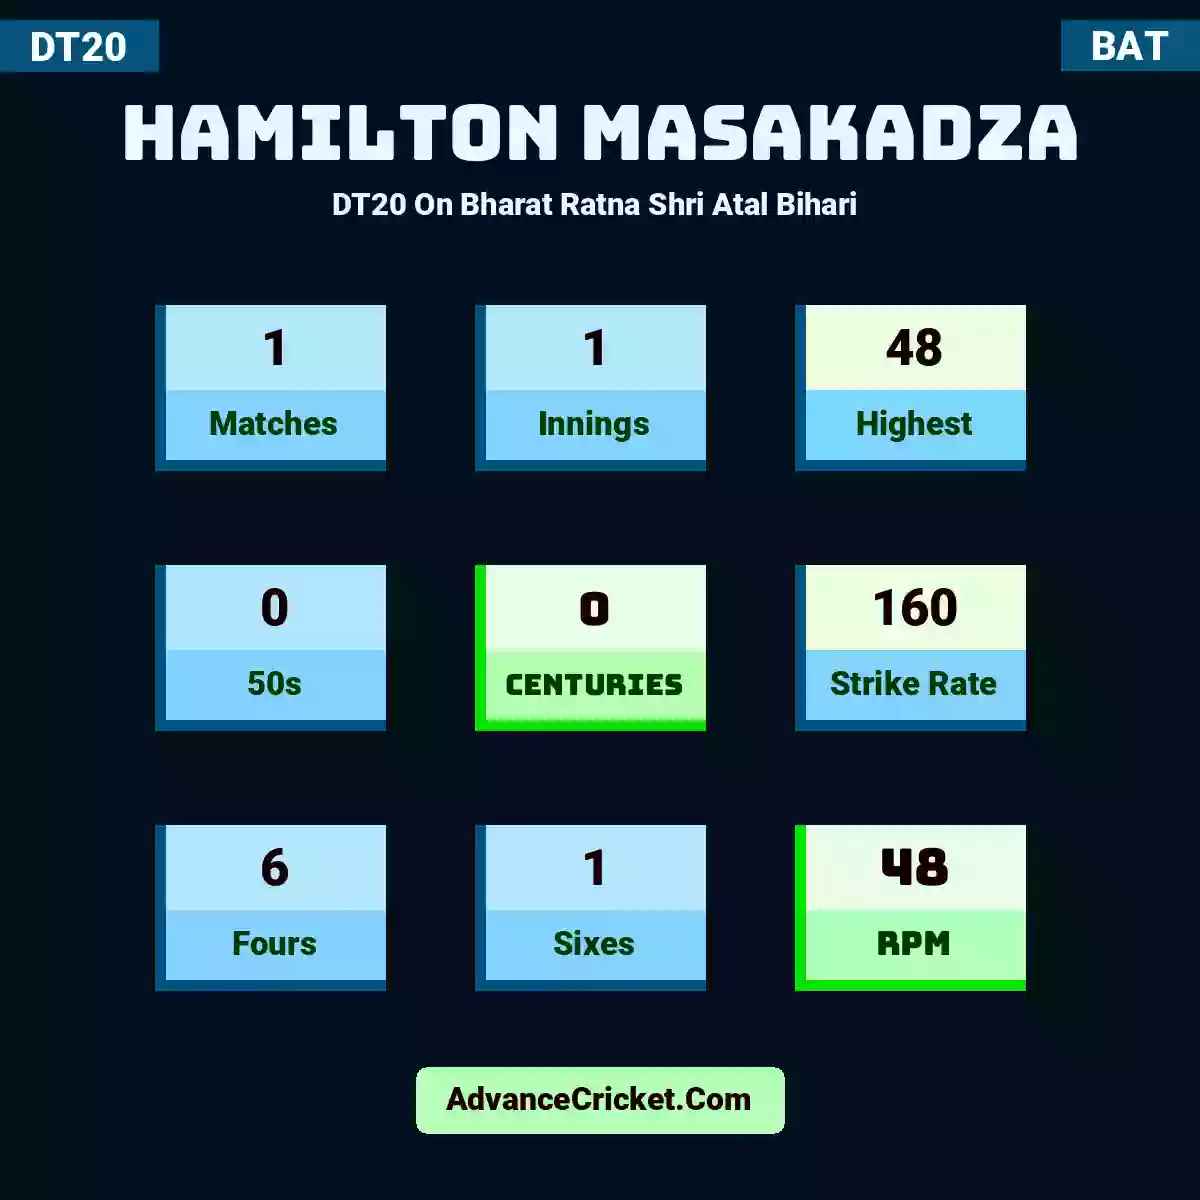 Hamilton Masakadza DT20  On Bharat Ratna Shri Atal Bihari , Hamilton Masakadza played 1 matches, scored 48 runs as highest, 0 half-centuries, and 0 centuries, with a strike rate of 160. H.Masakadza hit 6 fours and 1 sixes, with an RPM of 48.